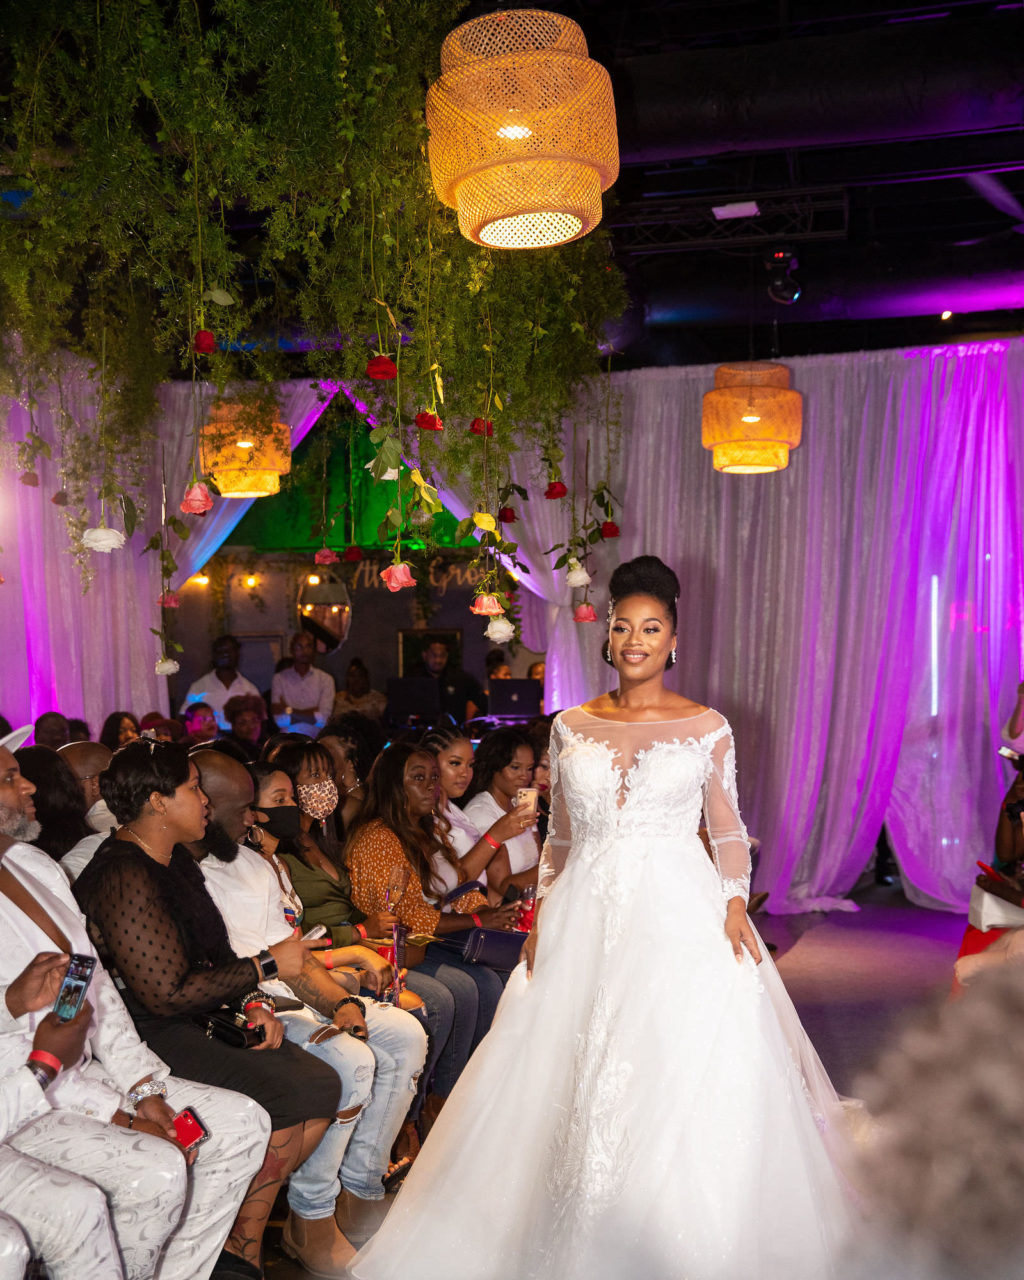 Tampa Bay Wedding Fashion Show in Ybor City, Bride Walks Down Aisle Runway in A Line Wedding Dress with Long Illusion Lace Sleeves | Designer Royal Bridal | Florida Venue 7th + Grove